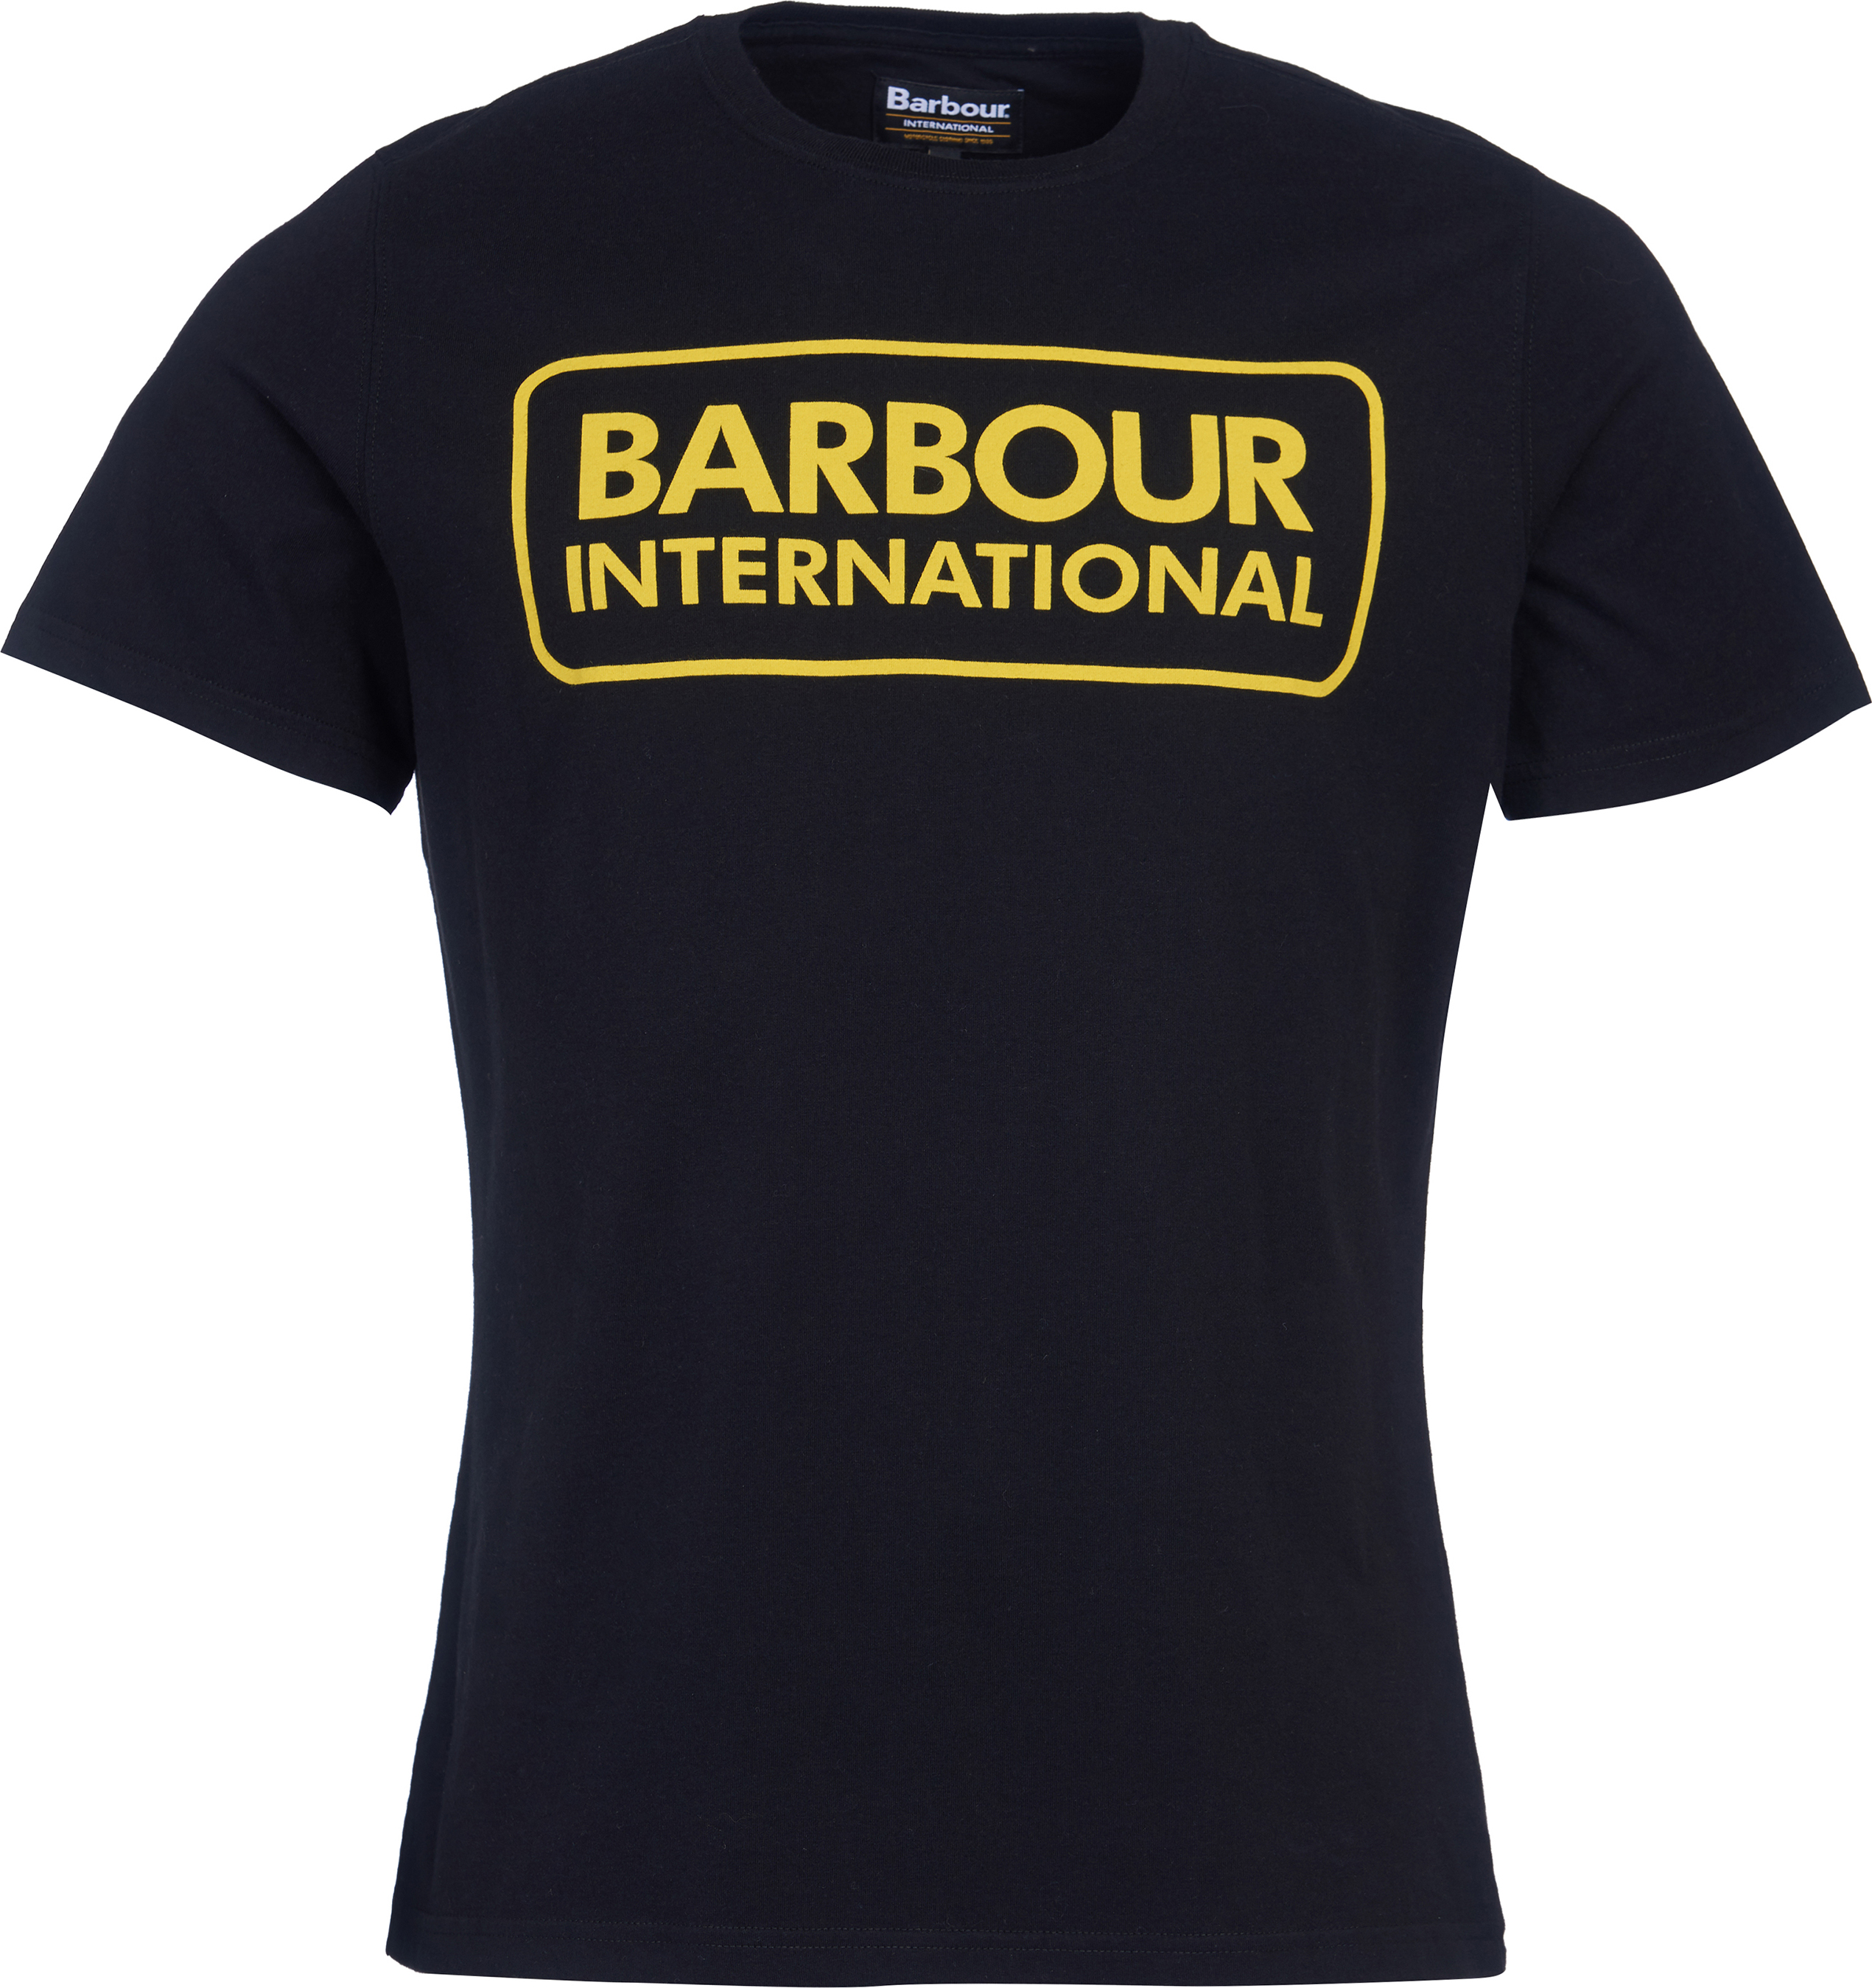 Barbour Barbour Men's Barbour International Essential Large Logo Tee Black S, Black